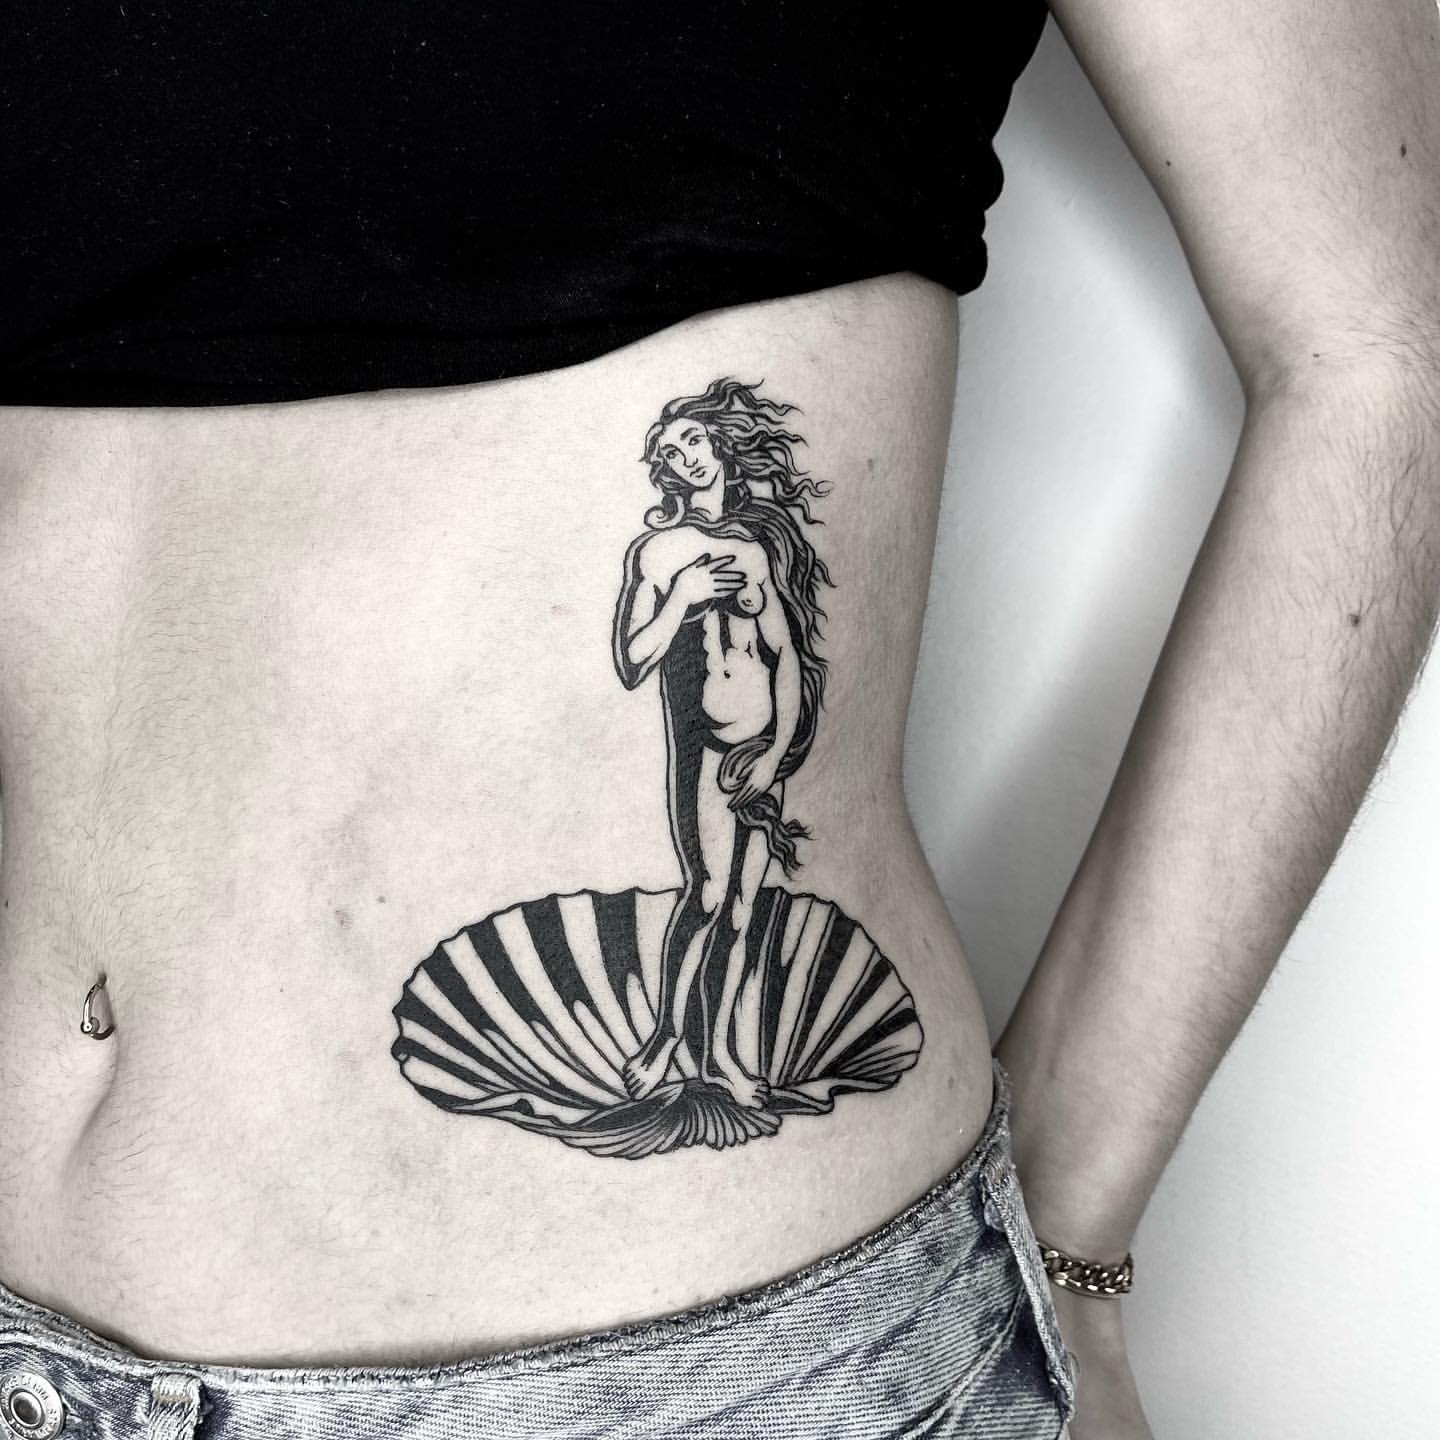 Tattoo uploaded by Yannis Steiakakis • Venus tattoo #tattoo #ancientgreek  #SculptureTattoo #sculpture #lines #ancient #venus #aphrodite #busto  #bustotattoo #minimal #minimaltattoo #minimalistic #art #tattooart #arte  #greece #bishoprotary #stattoo ...